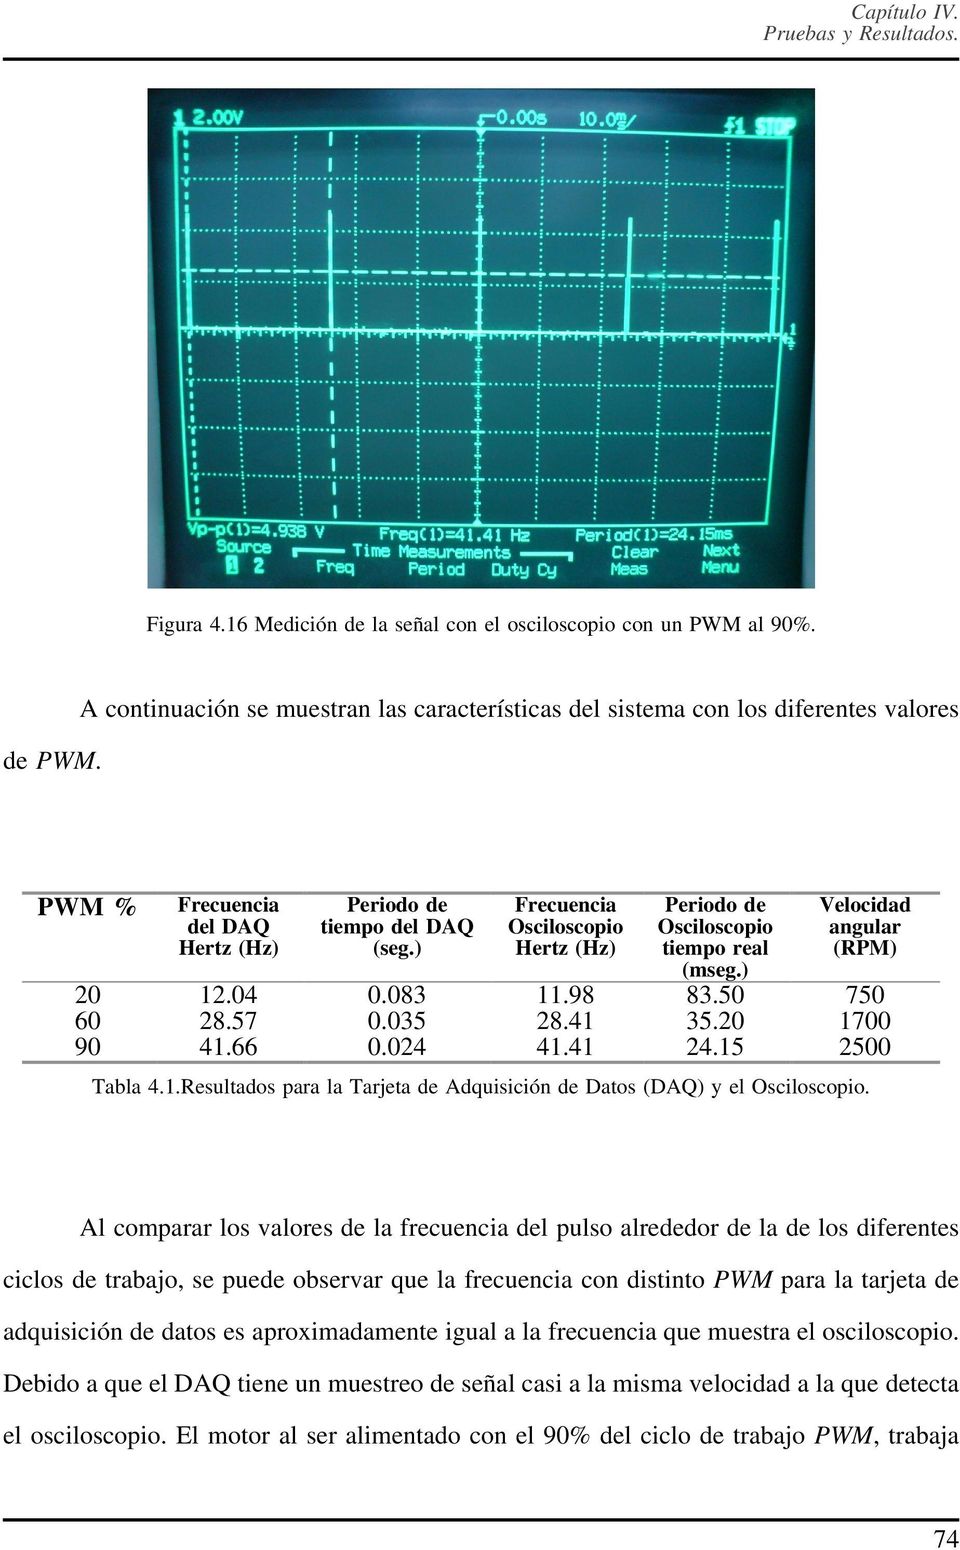 ) Frecuencia Osciloscopio Hertz (Hz) Periodo de Osciloscopio tiempo real (mseg.) Velocidad angular (RPM) 20 12.04 0.083 11.98 83.50 750 60 28.57 0.035 28.41 35.20 1700 90 41.66 0.024 41.41 24.